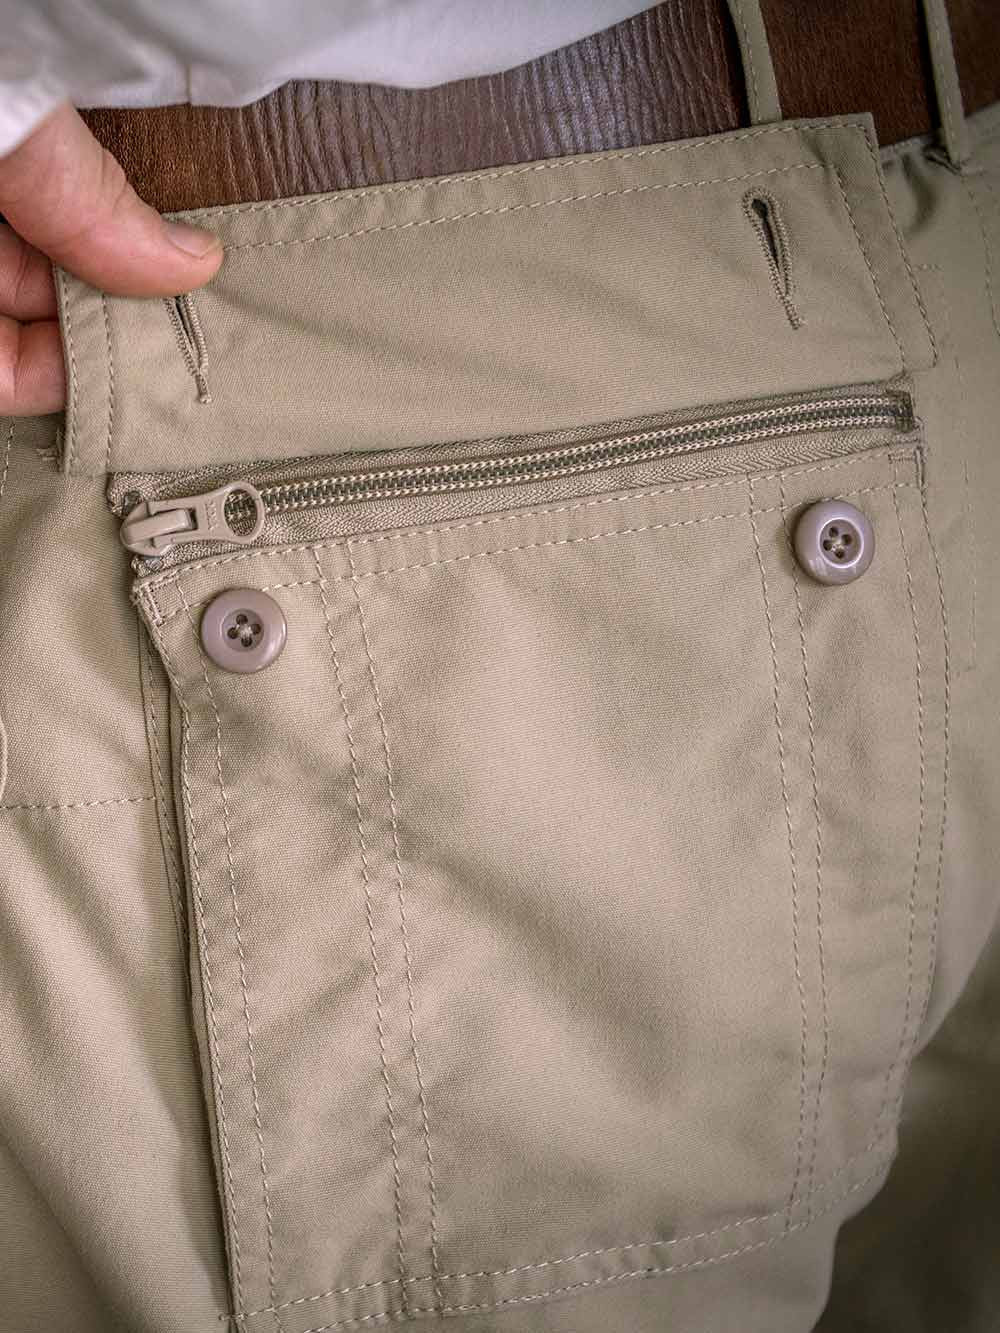 travel pants zipper shorts